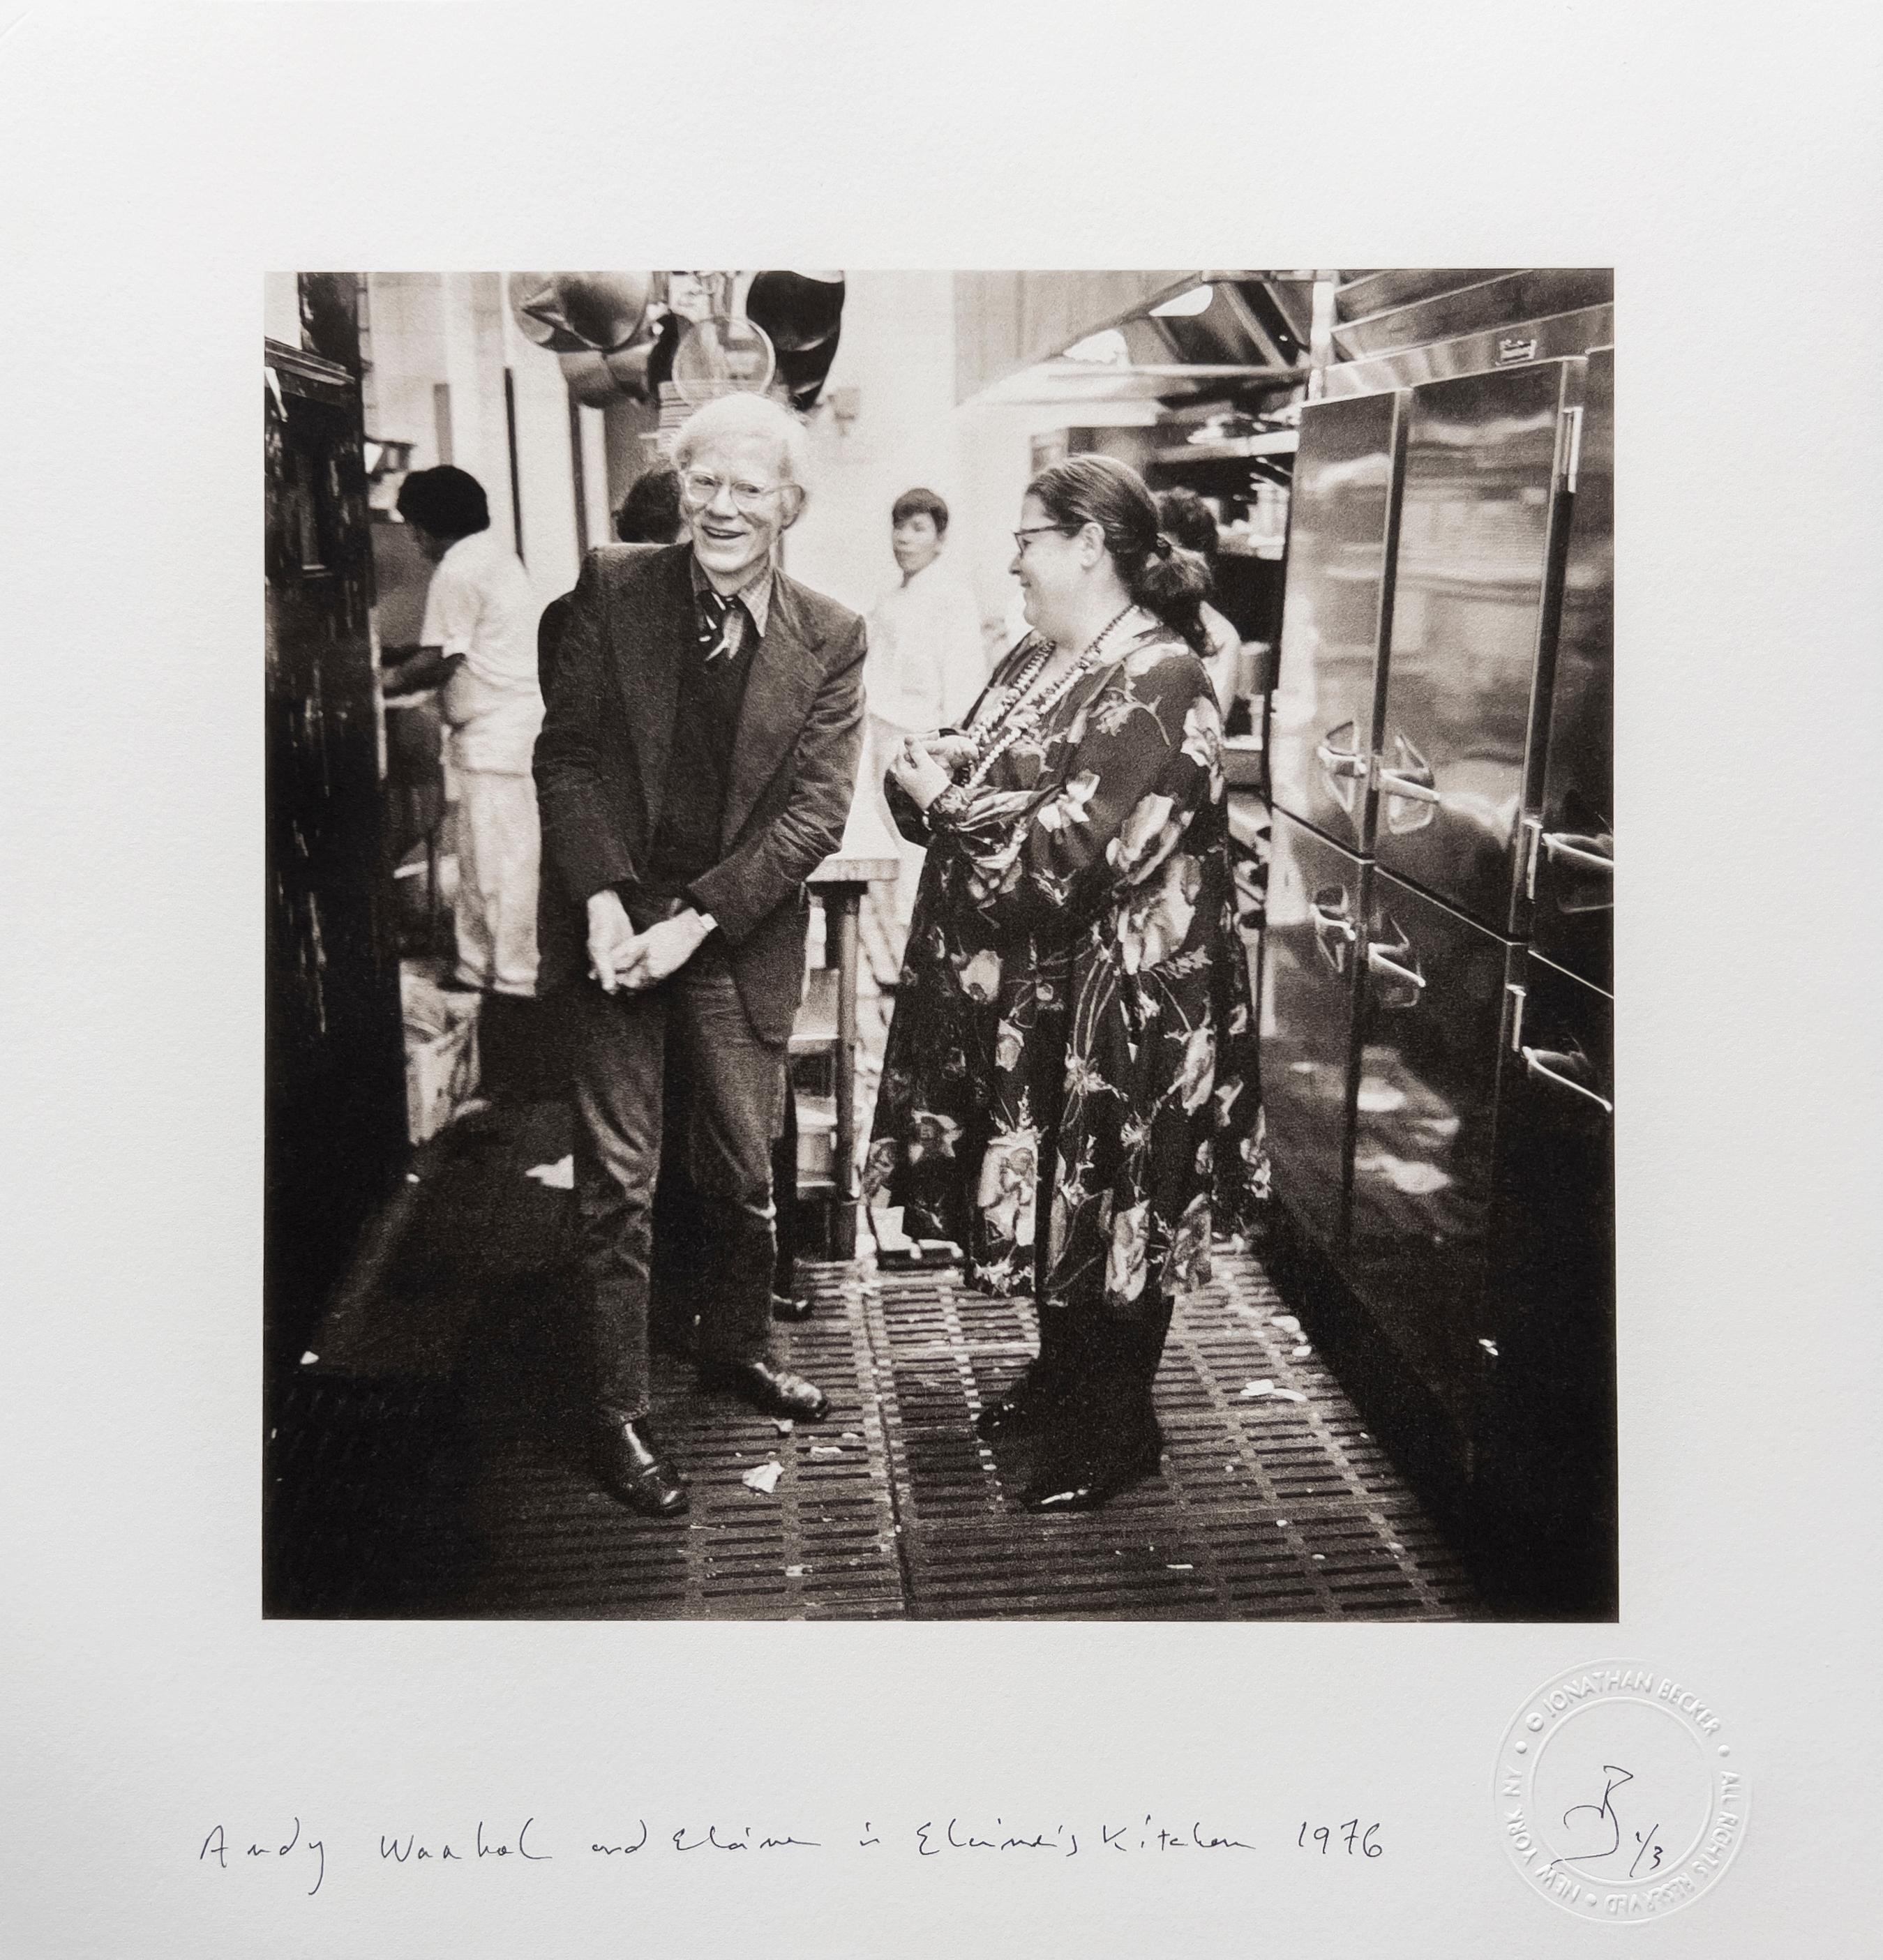 Elaine's Kitchen - Andy Warhol et Elaine,  New York, 1976